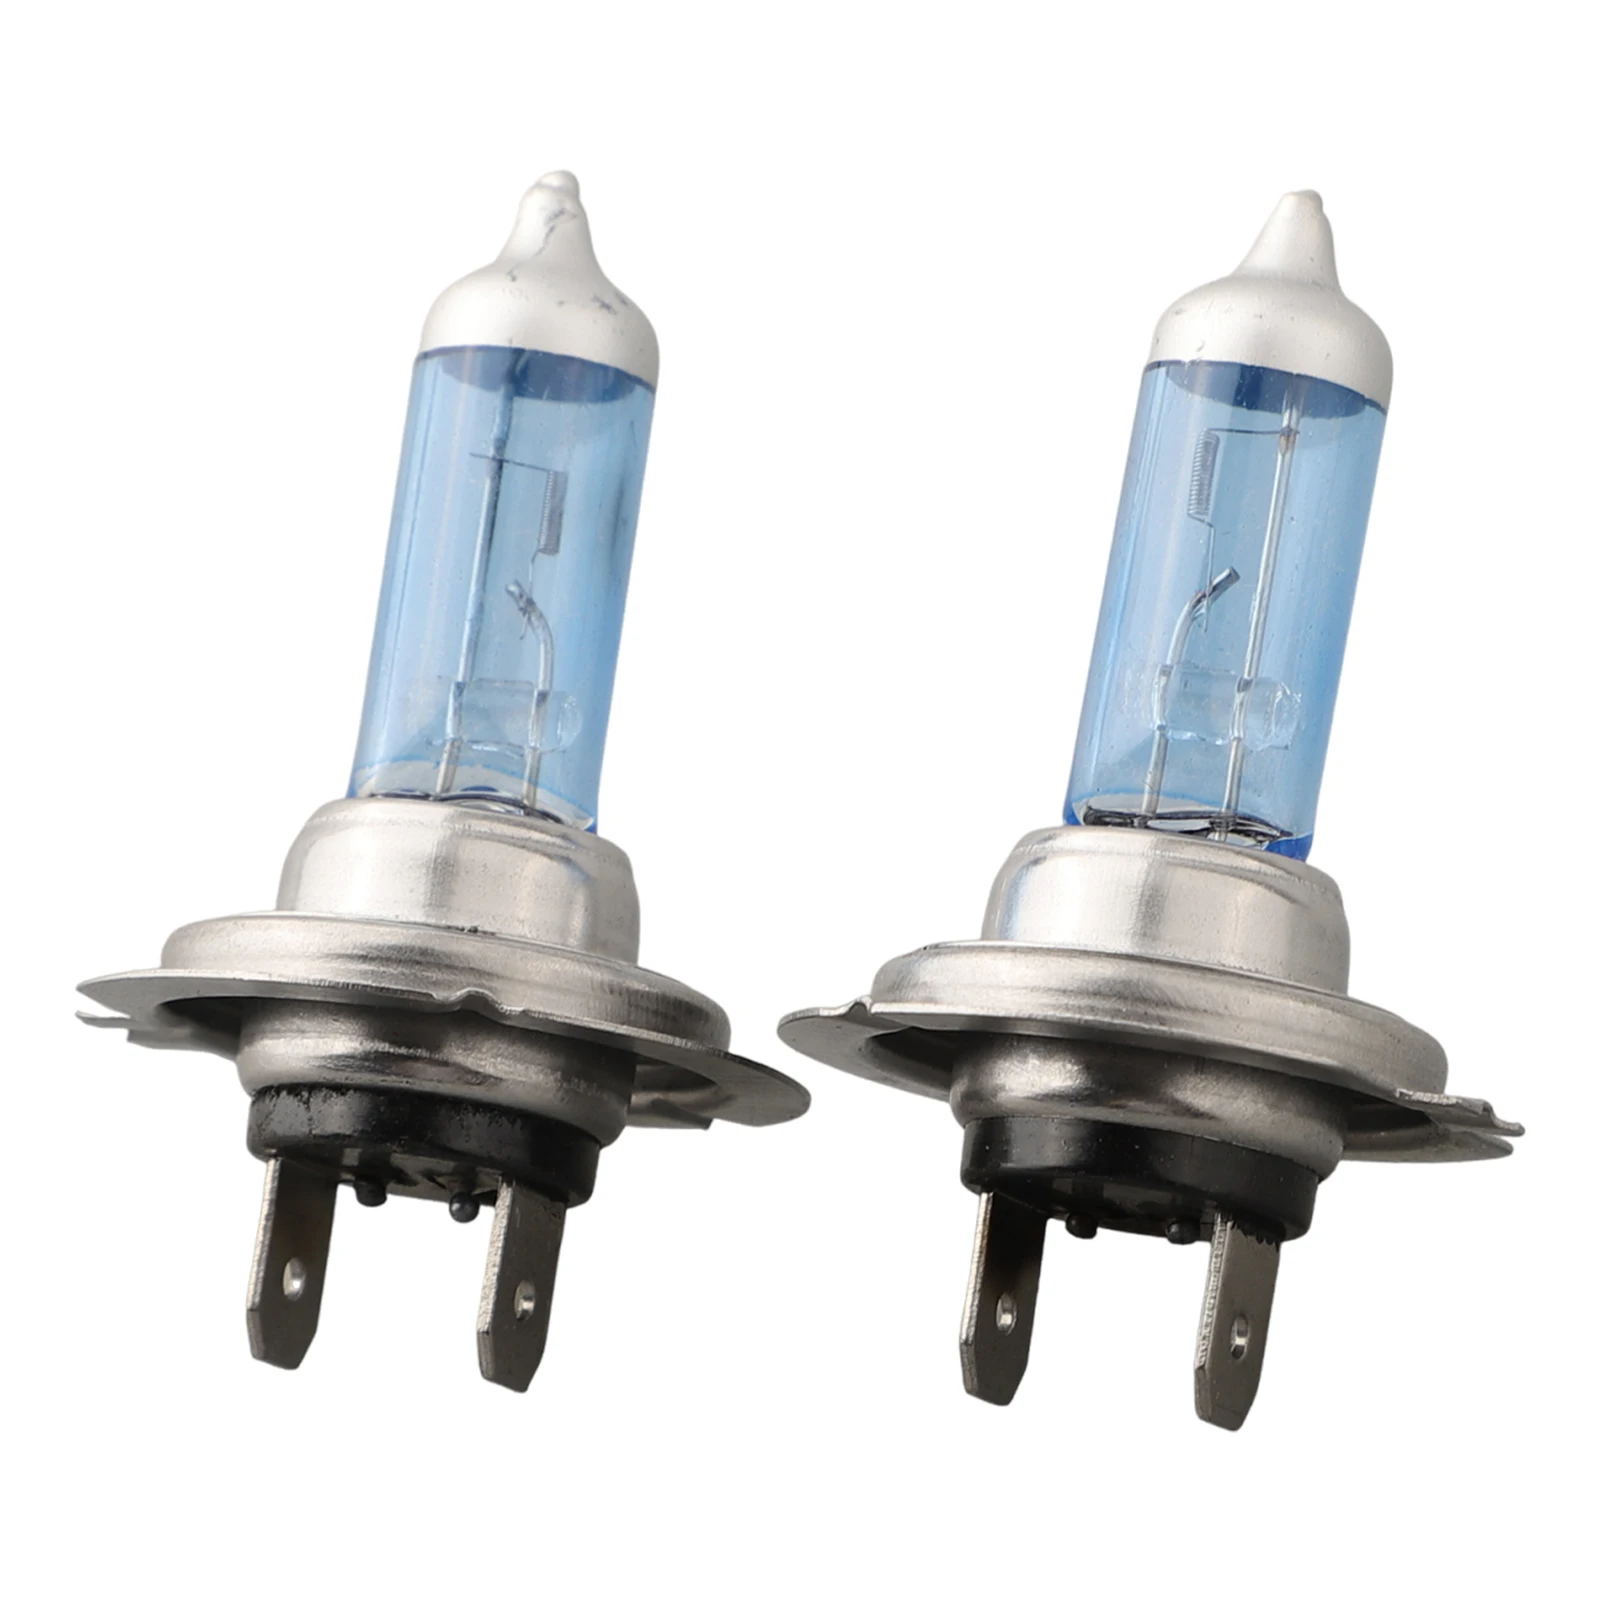 

2pcs High Quality Halogen Bulbs H7 LED 55W 12V 6000K Car Headlight Fog Lights Driving Lamp White Replacement Bulb